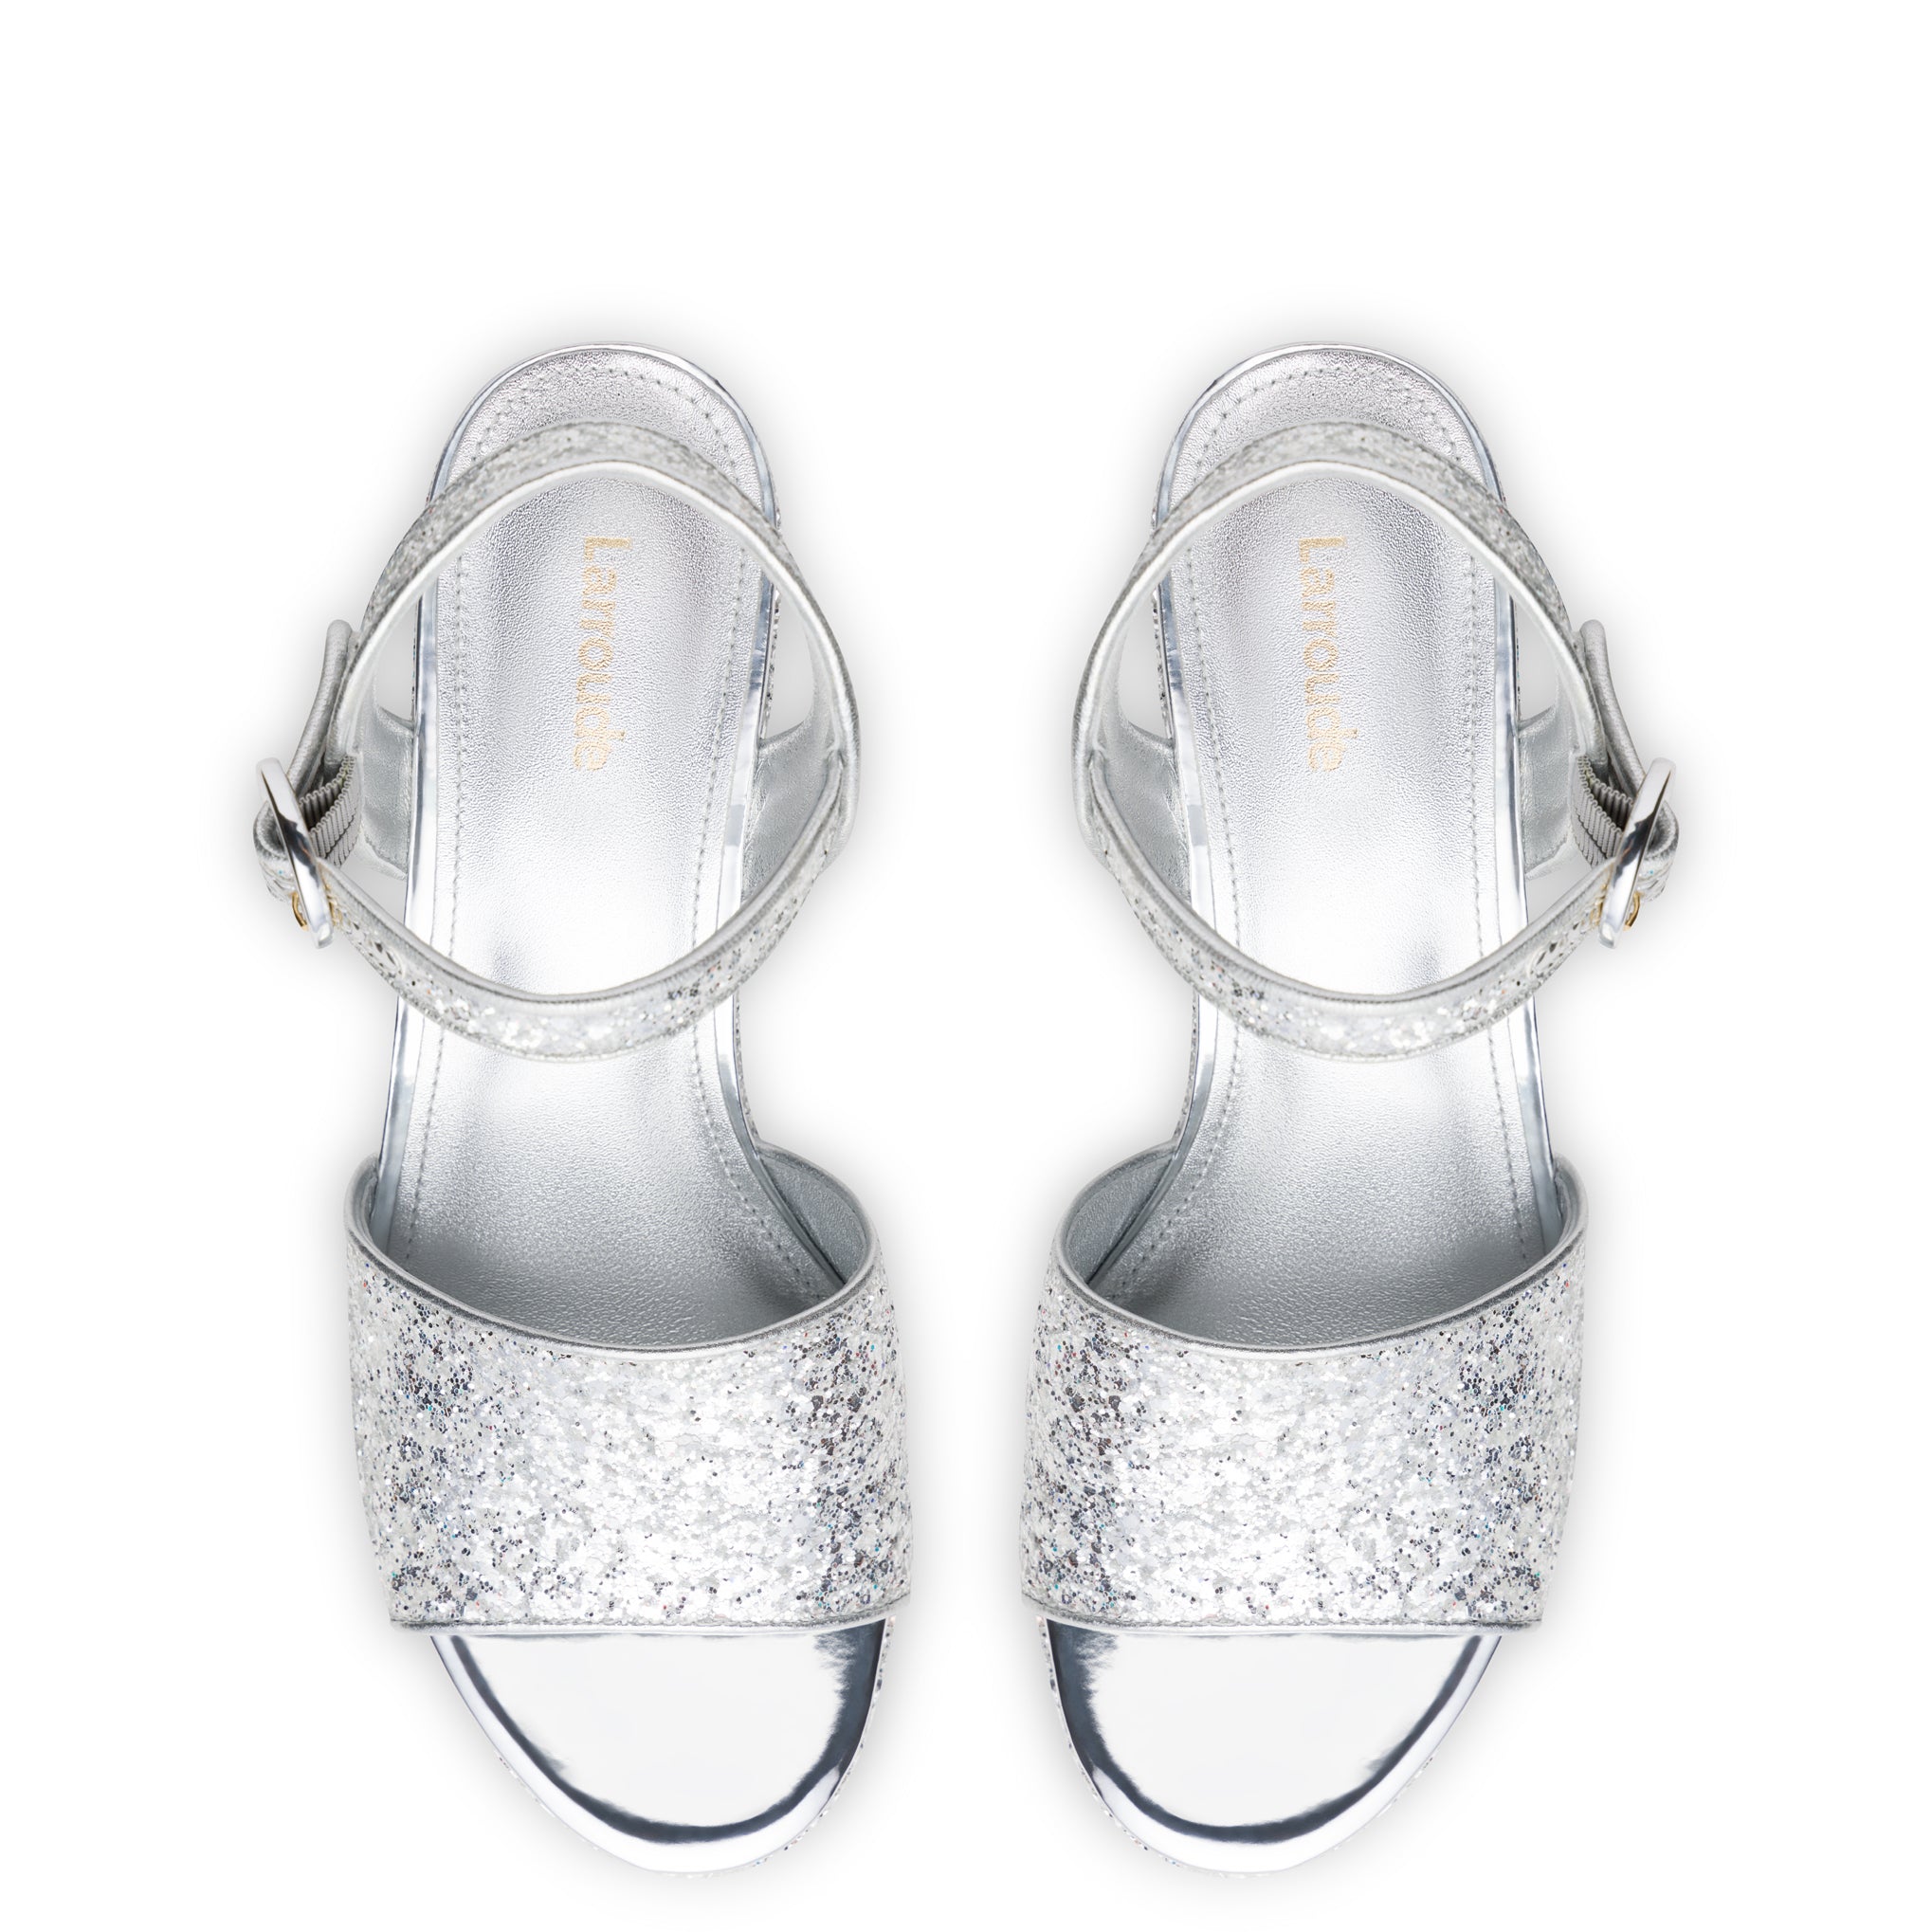 Miso Platform Strap Sandal In Silver Glitter